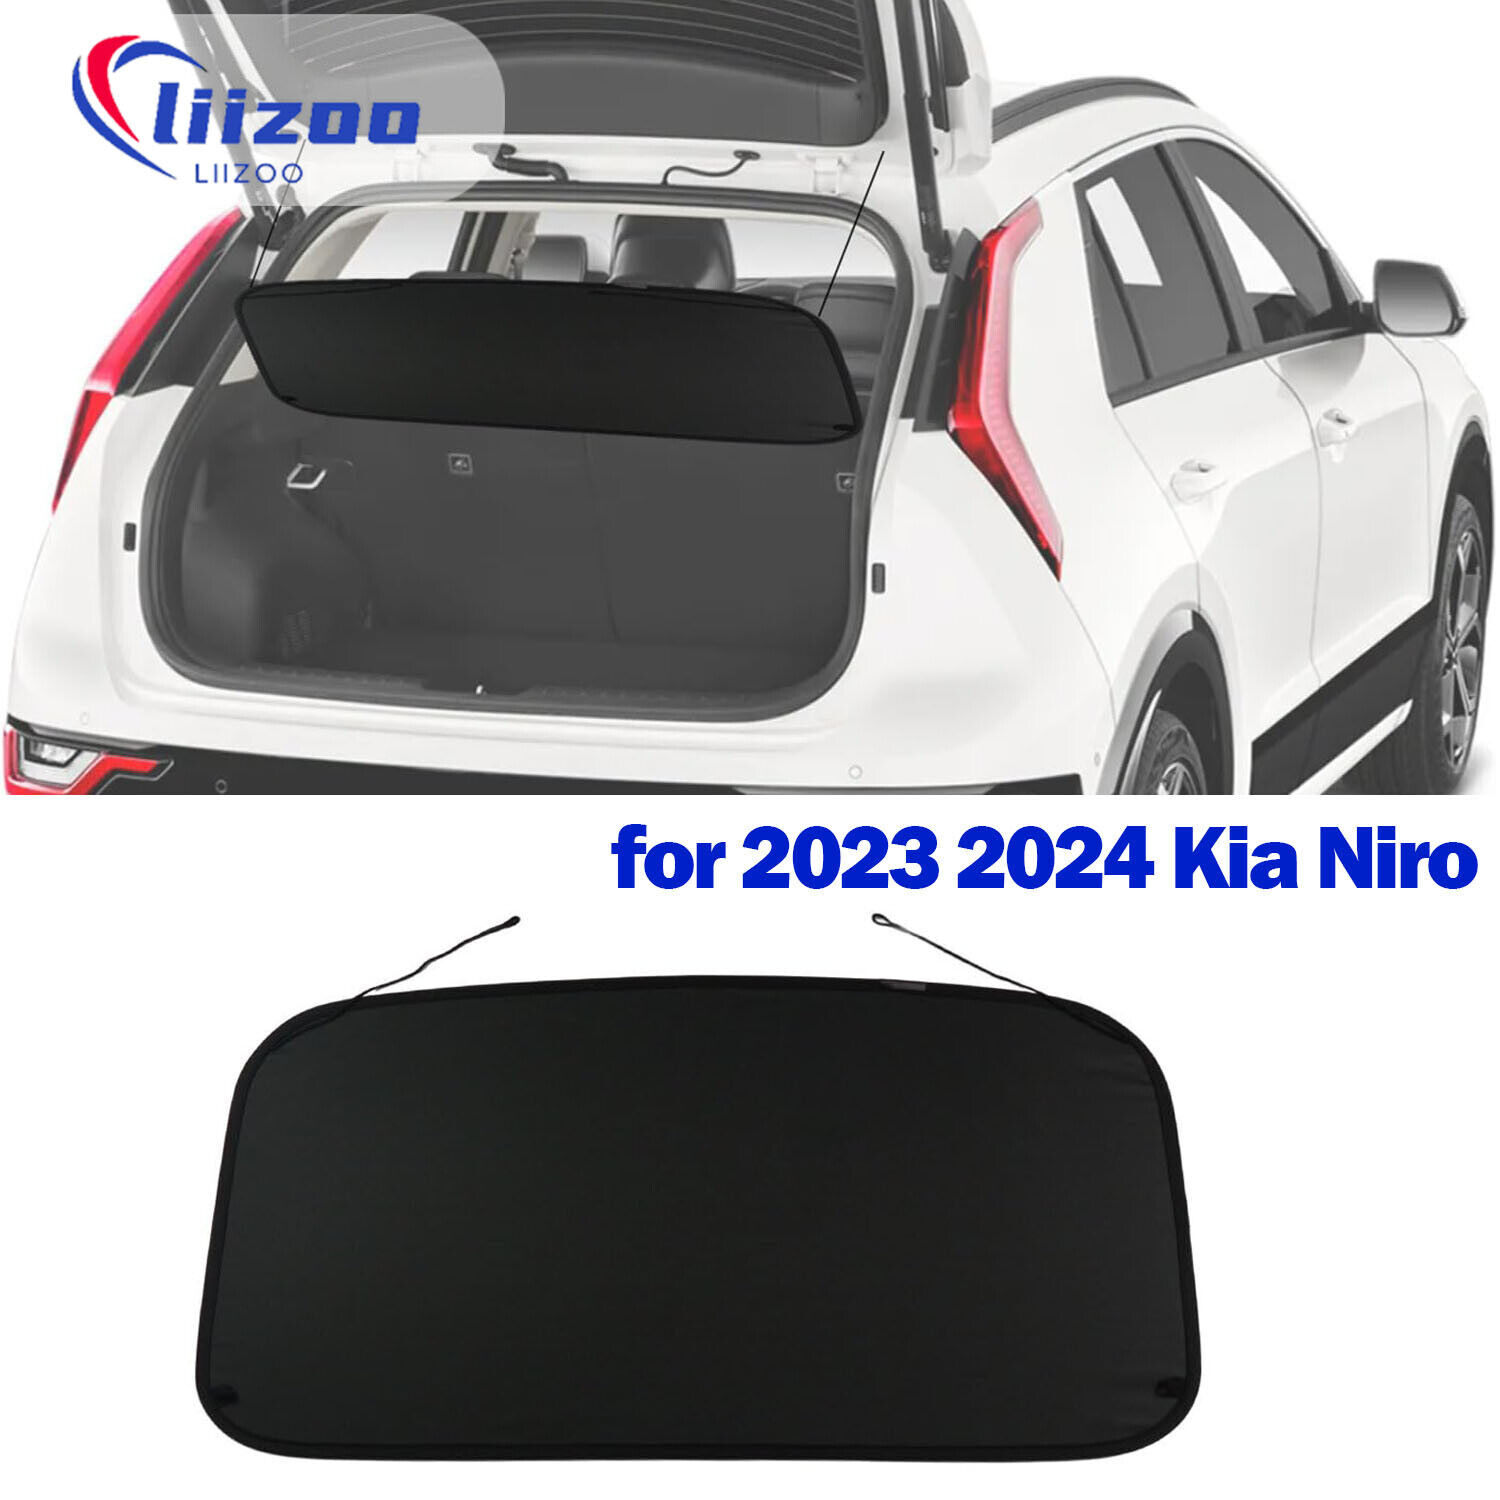 For 2023 2024 Kia Niro Cargo Cover Rear Trunk Privacy Cover Shielding Shade